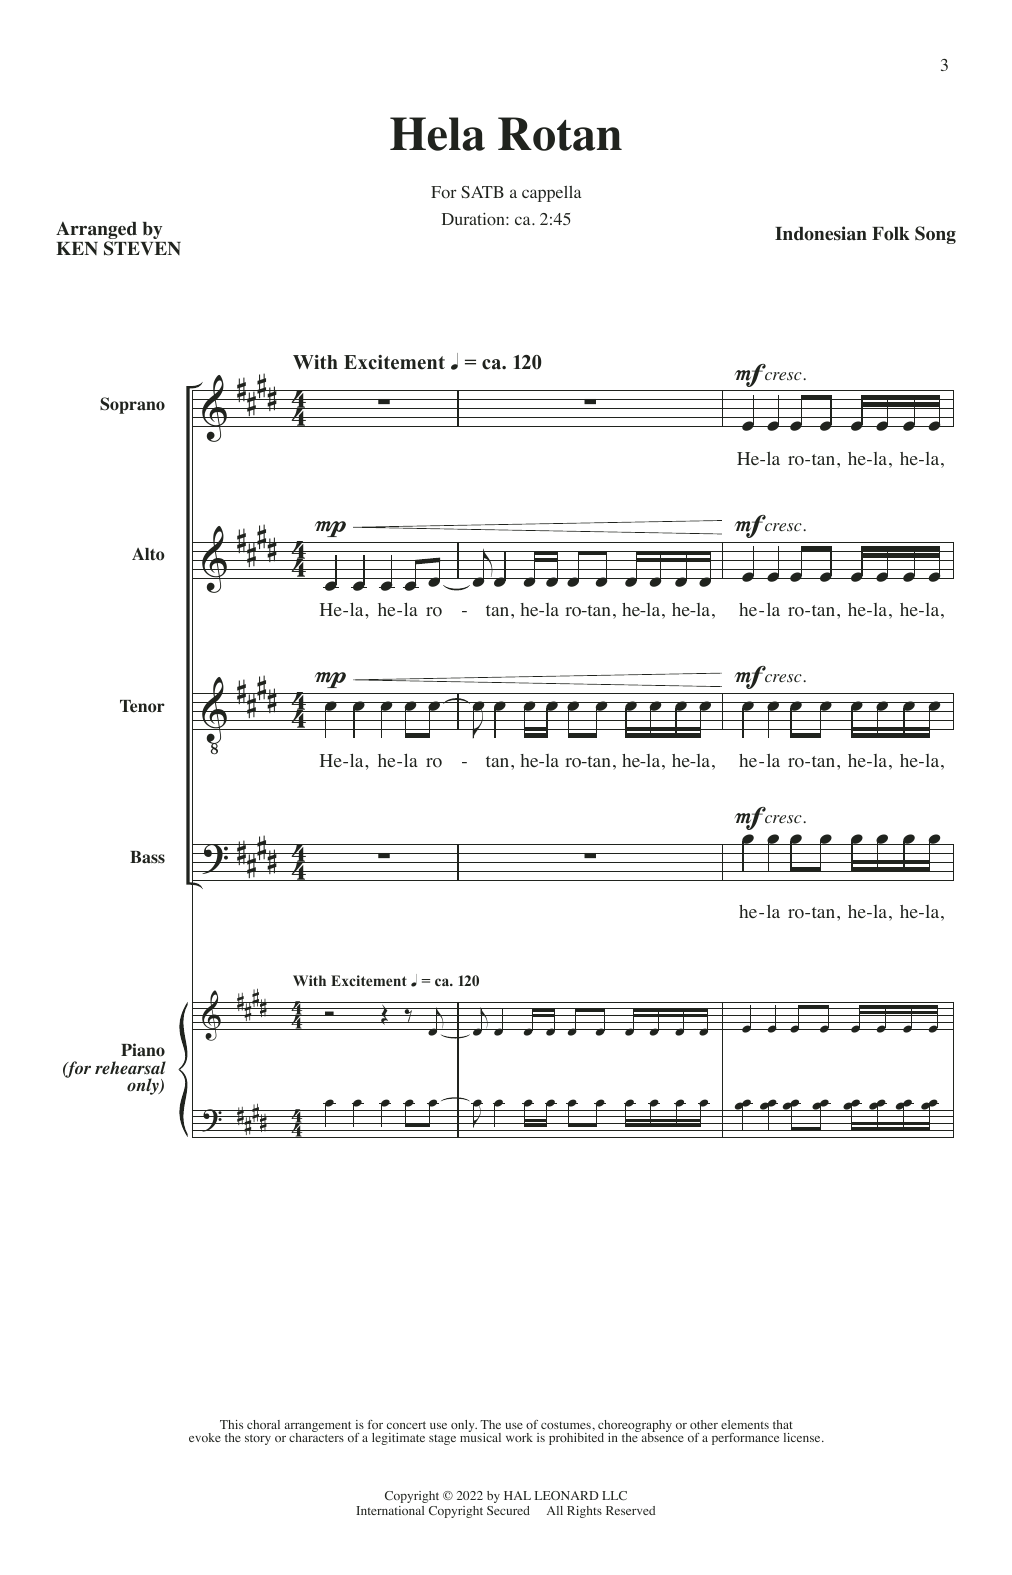 Indonesian Folk Song Hela Rotan (arr. Ken Steven) Sheet Music Notes & Chords for SATB Choir - Download or Print PDF